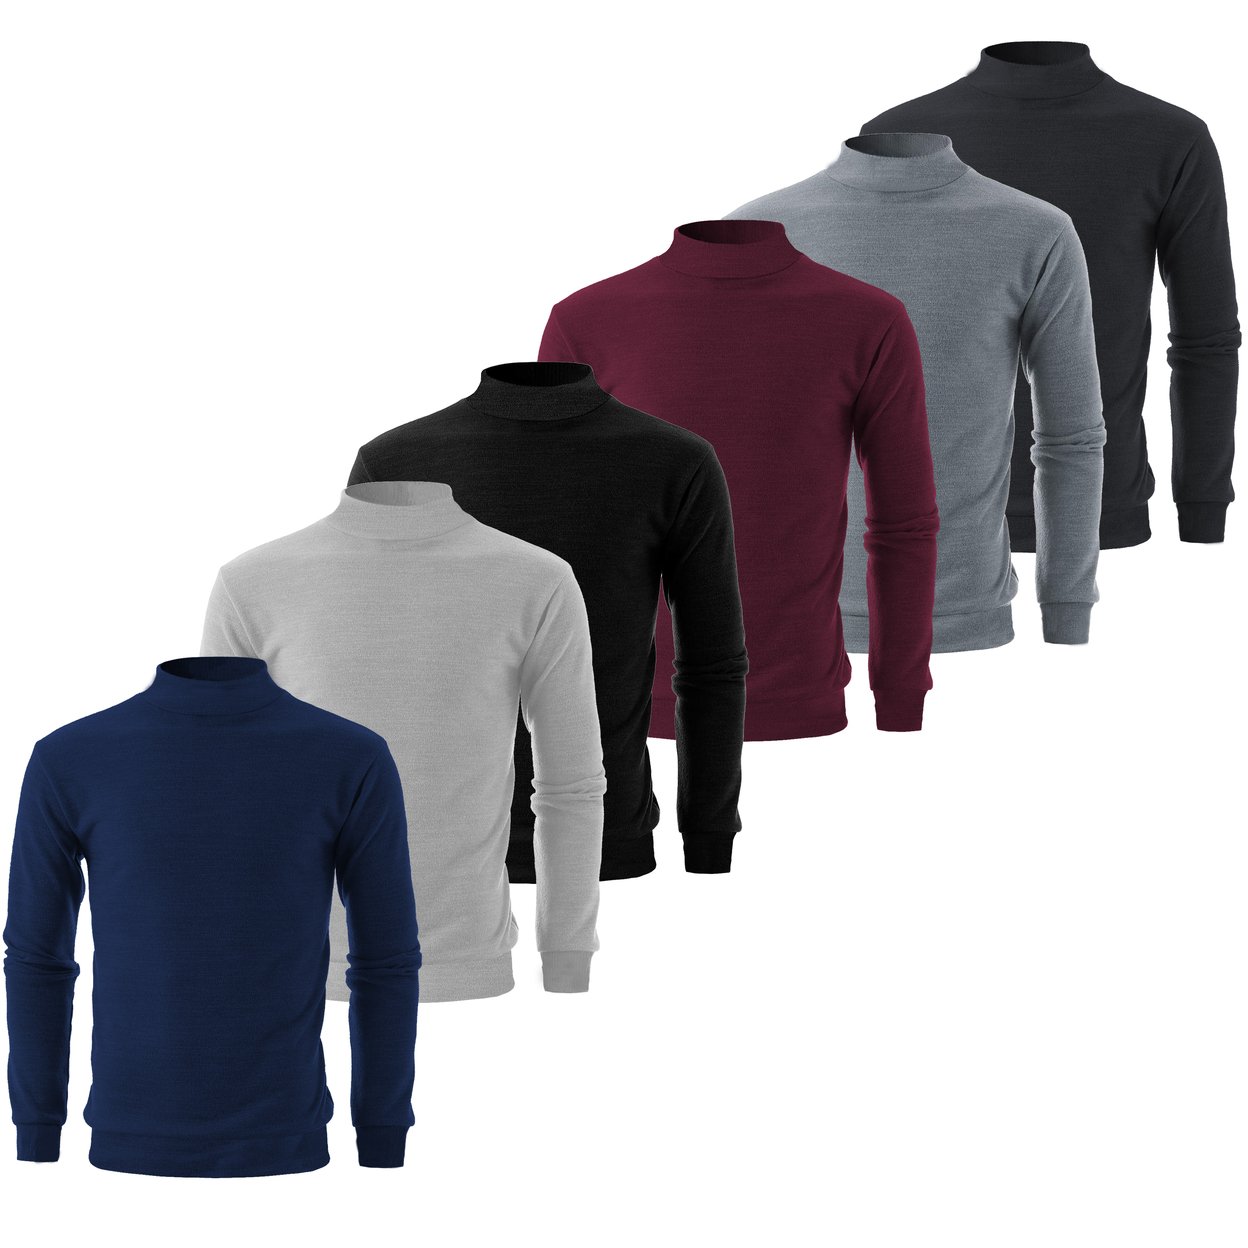 Men's Winter Warm Cozy Knit Slim-Fit Mock Neck Sweater - Navy, Medium